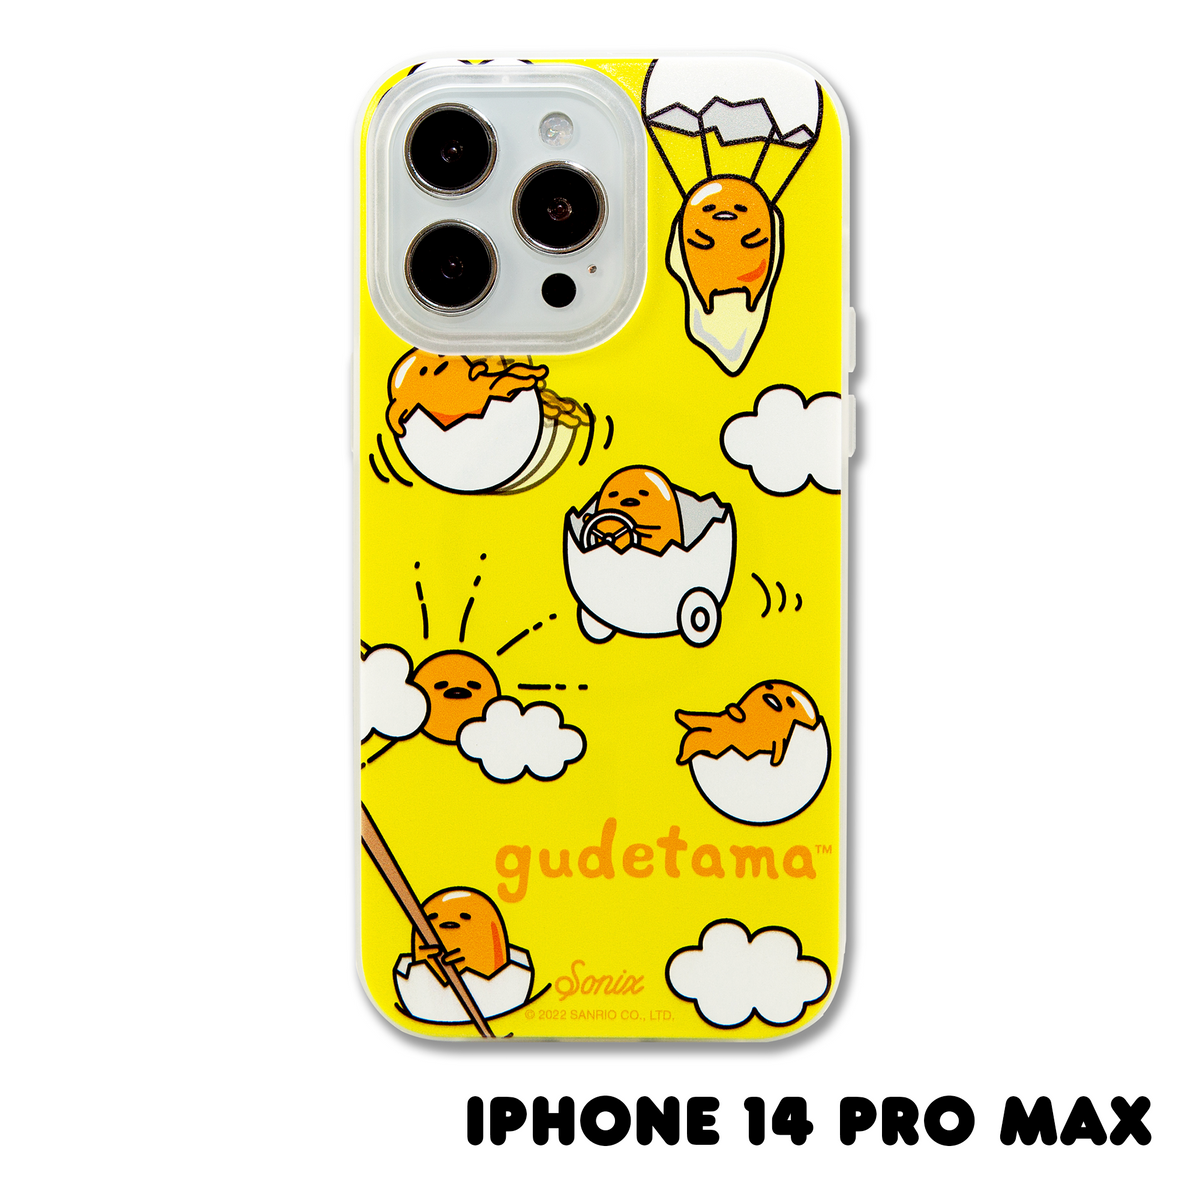 Gudetama x Sonix Lazy Egg iPhone Case Accessory BySonix Inc. WHITE 14 PRO MAX 